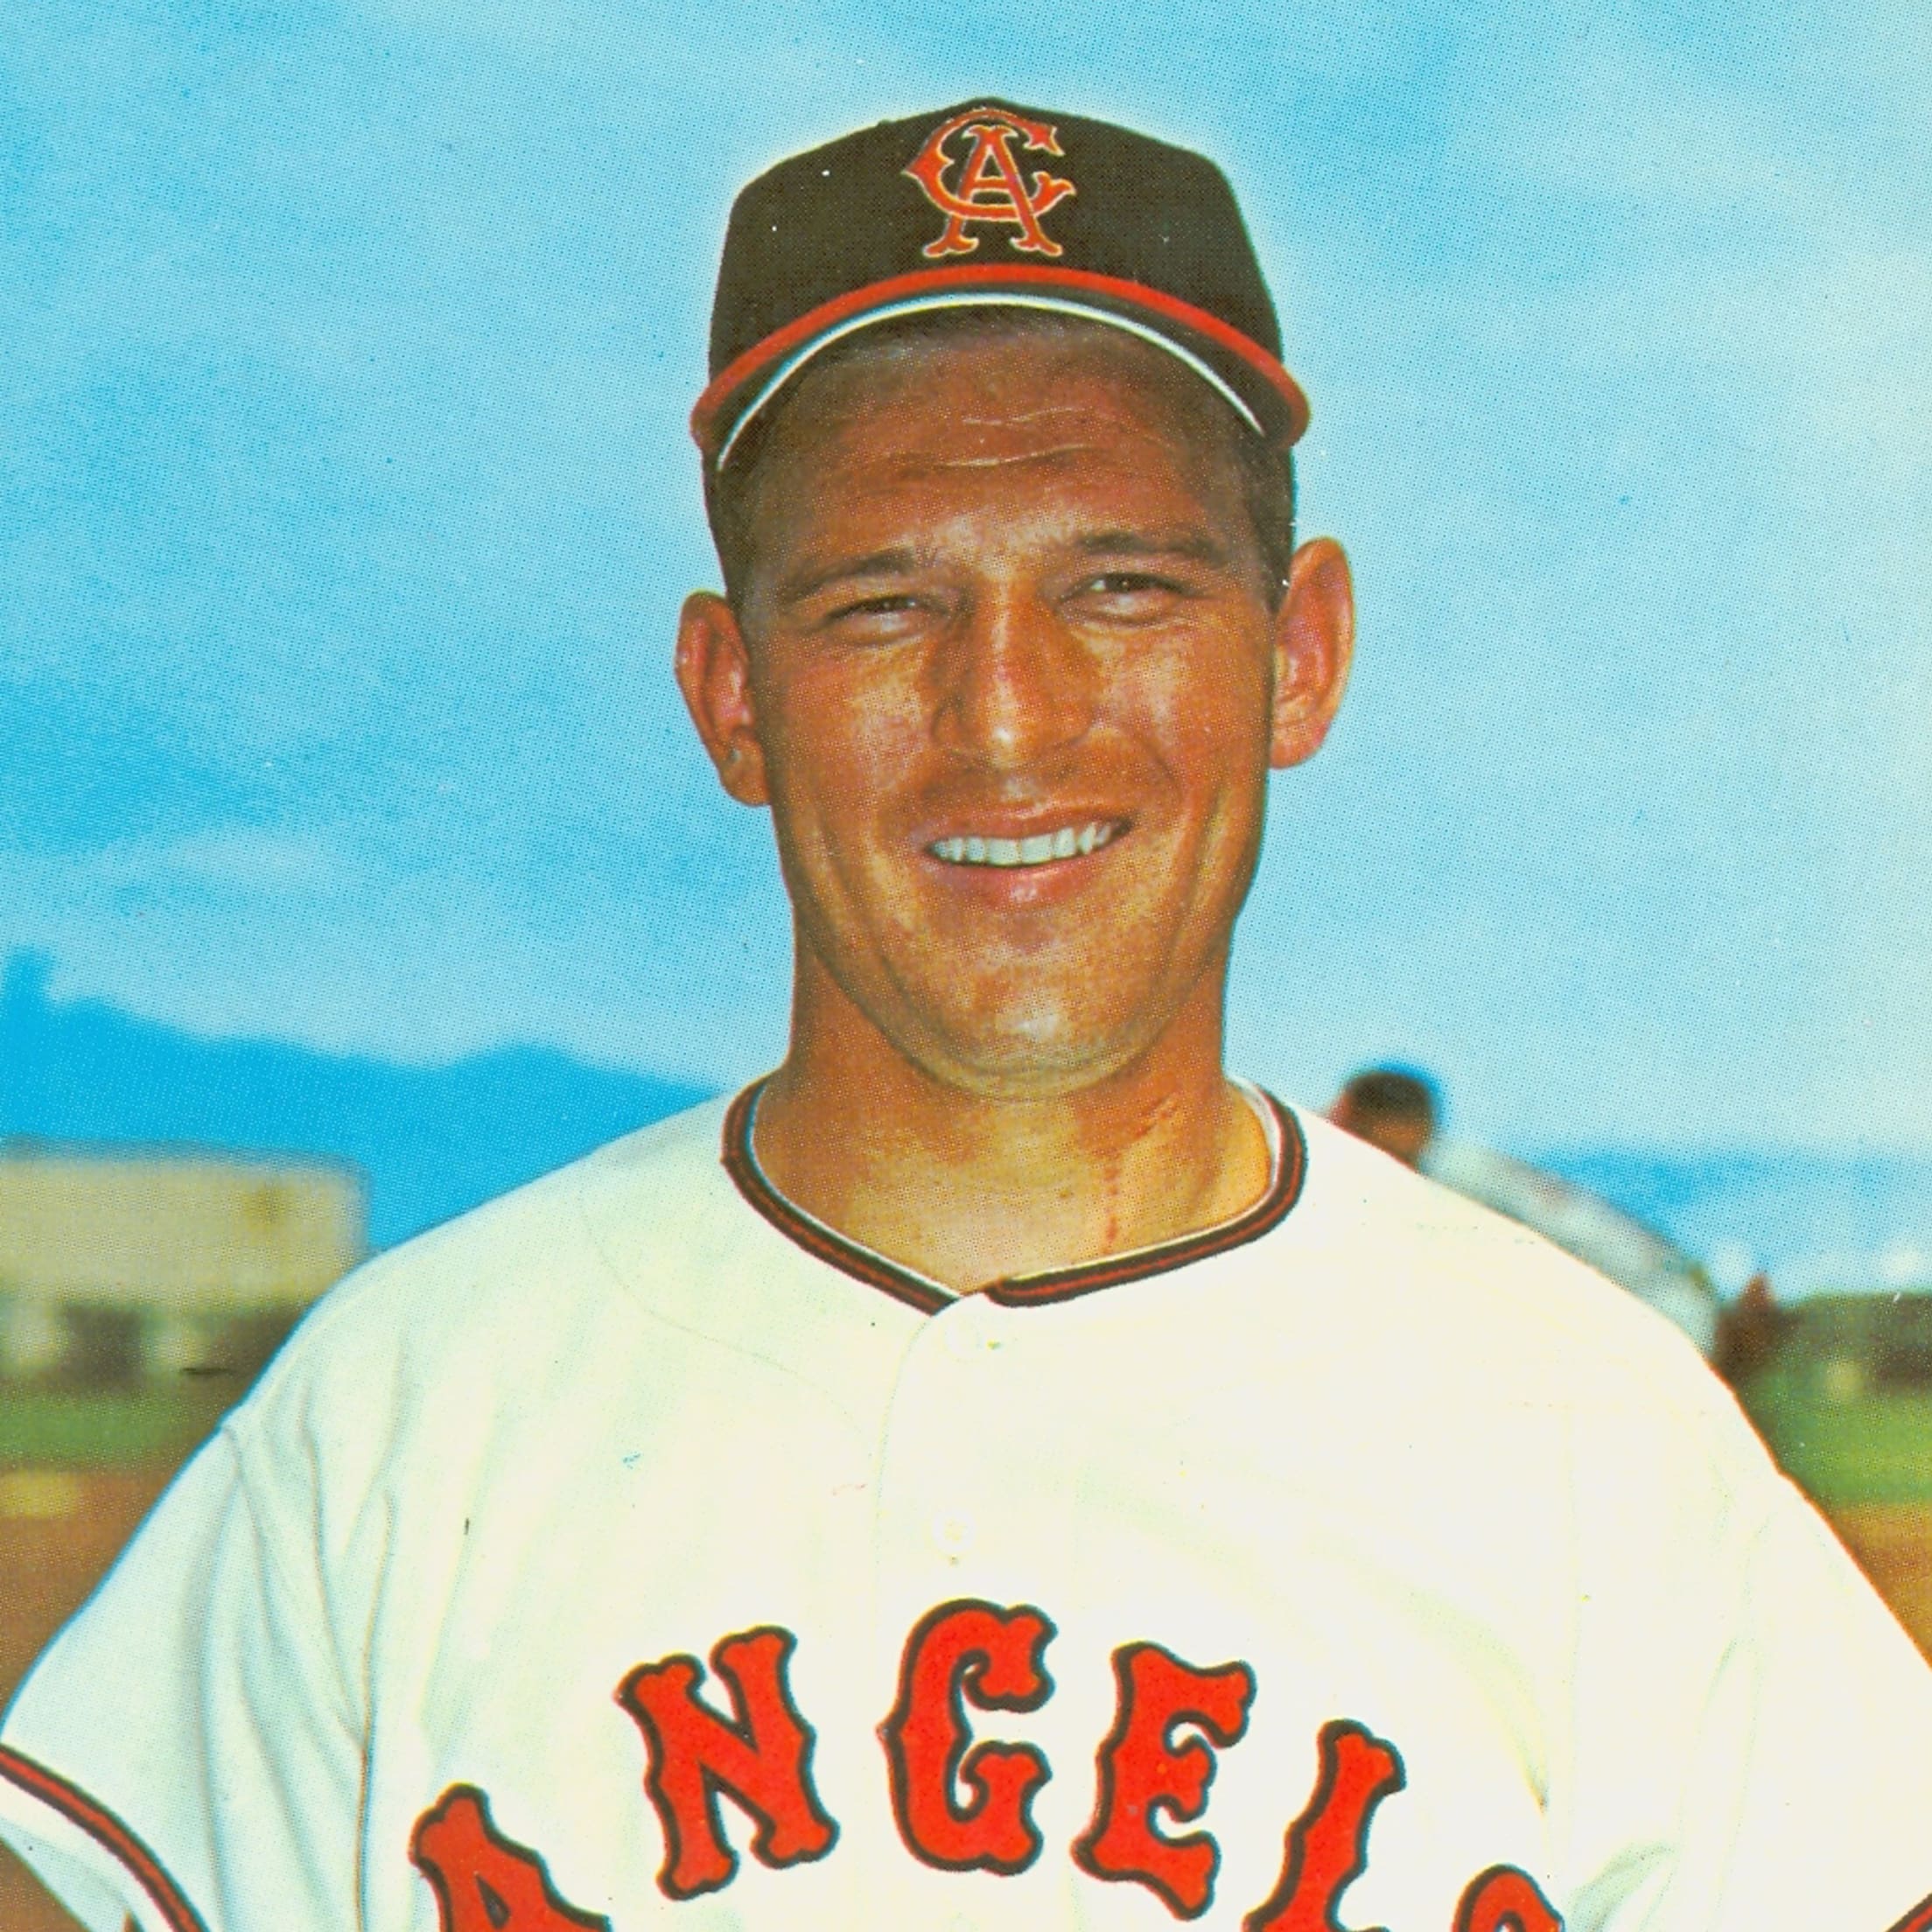 Dean Chance Jersey - 1960's California Angels Cooperstown Baseball Jersey